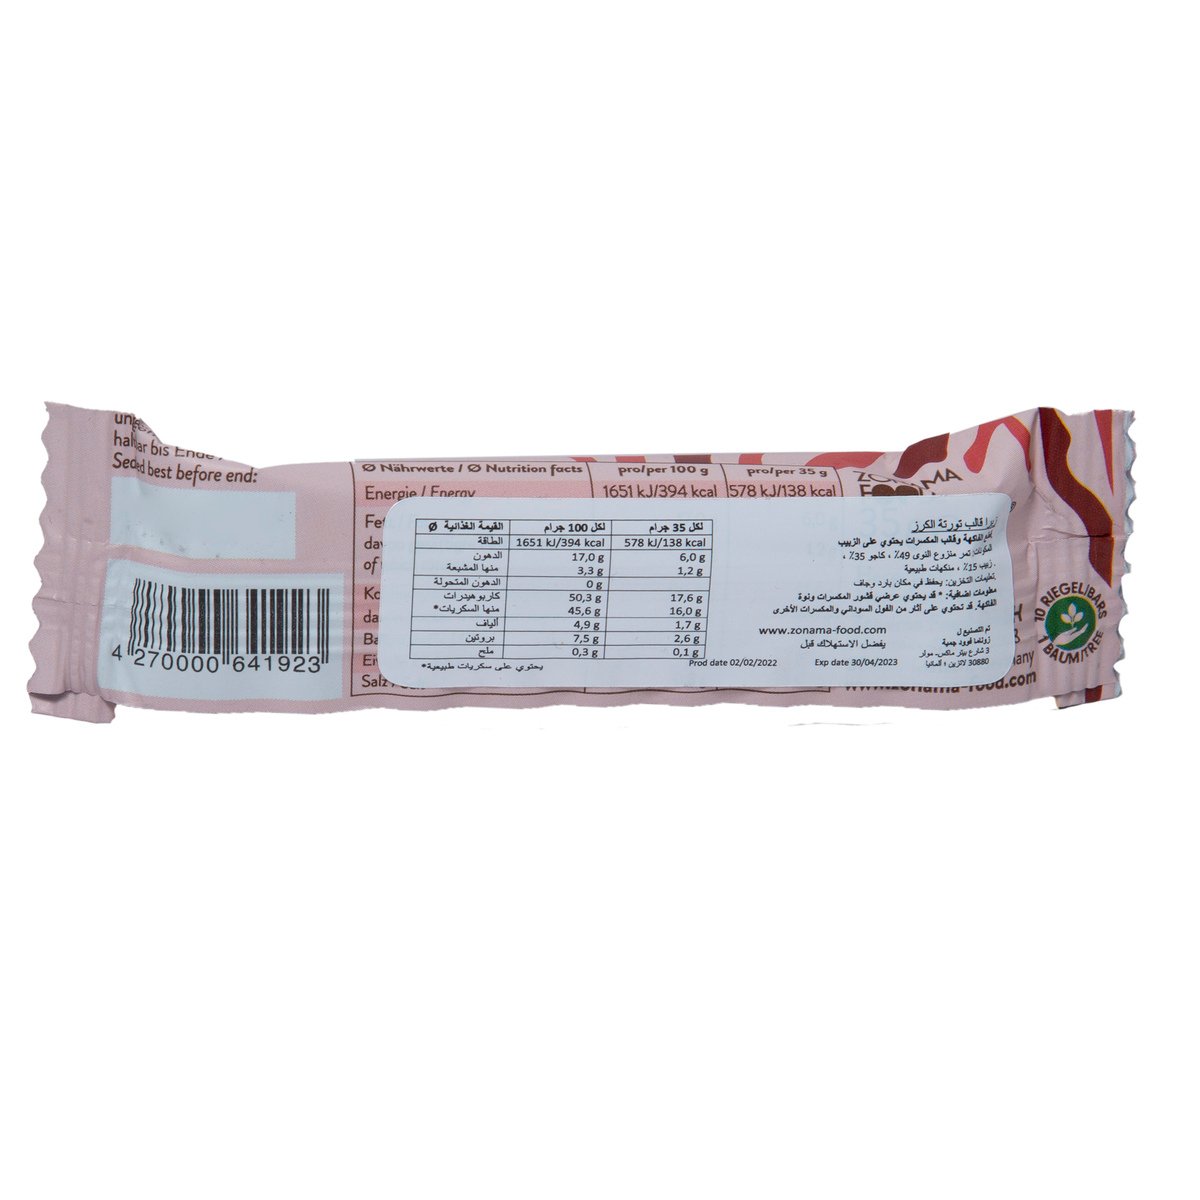 Zebra Cherry Tart Raw Fruit & Nut Bar 35 g